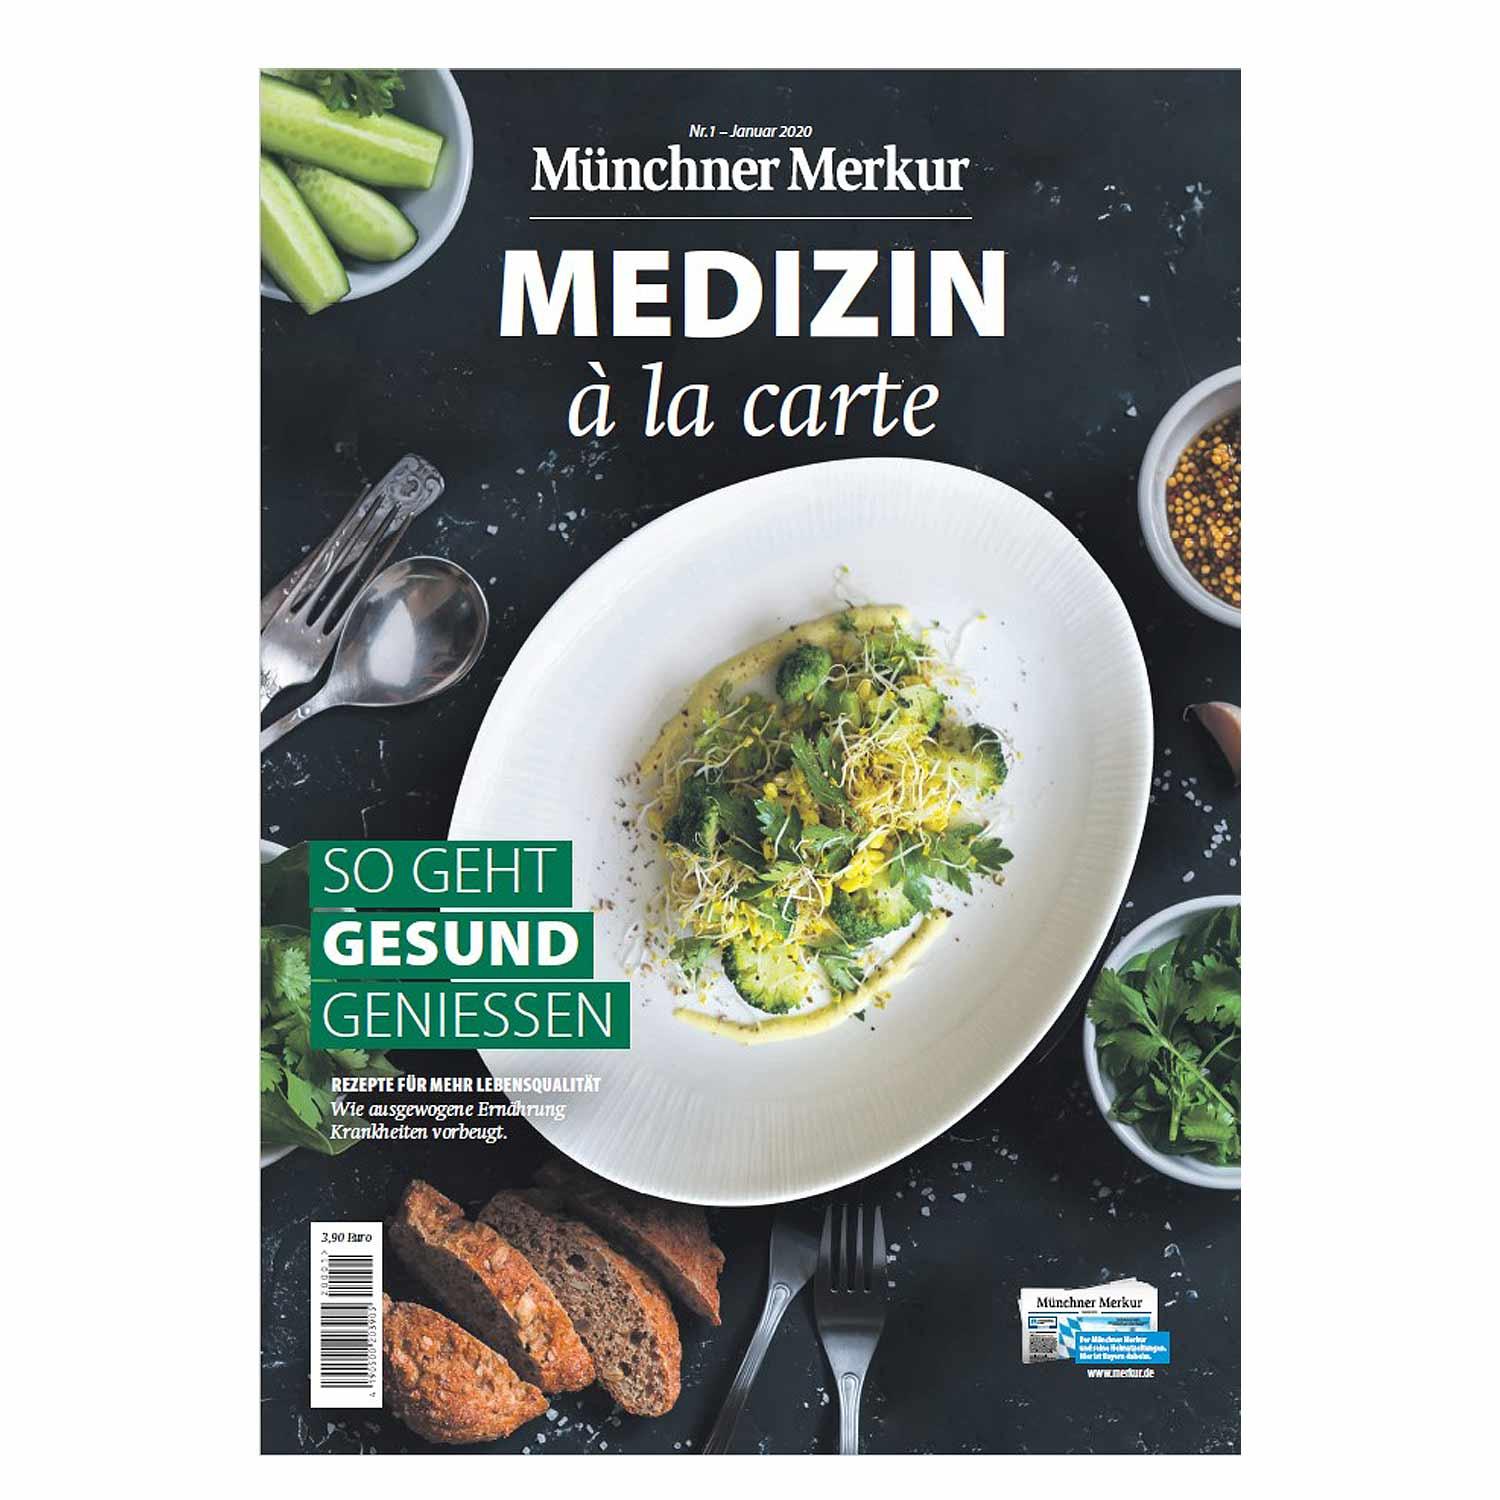 Magazin "Medizin à la carte" - bavariashop - mei LebensGfui